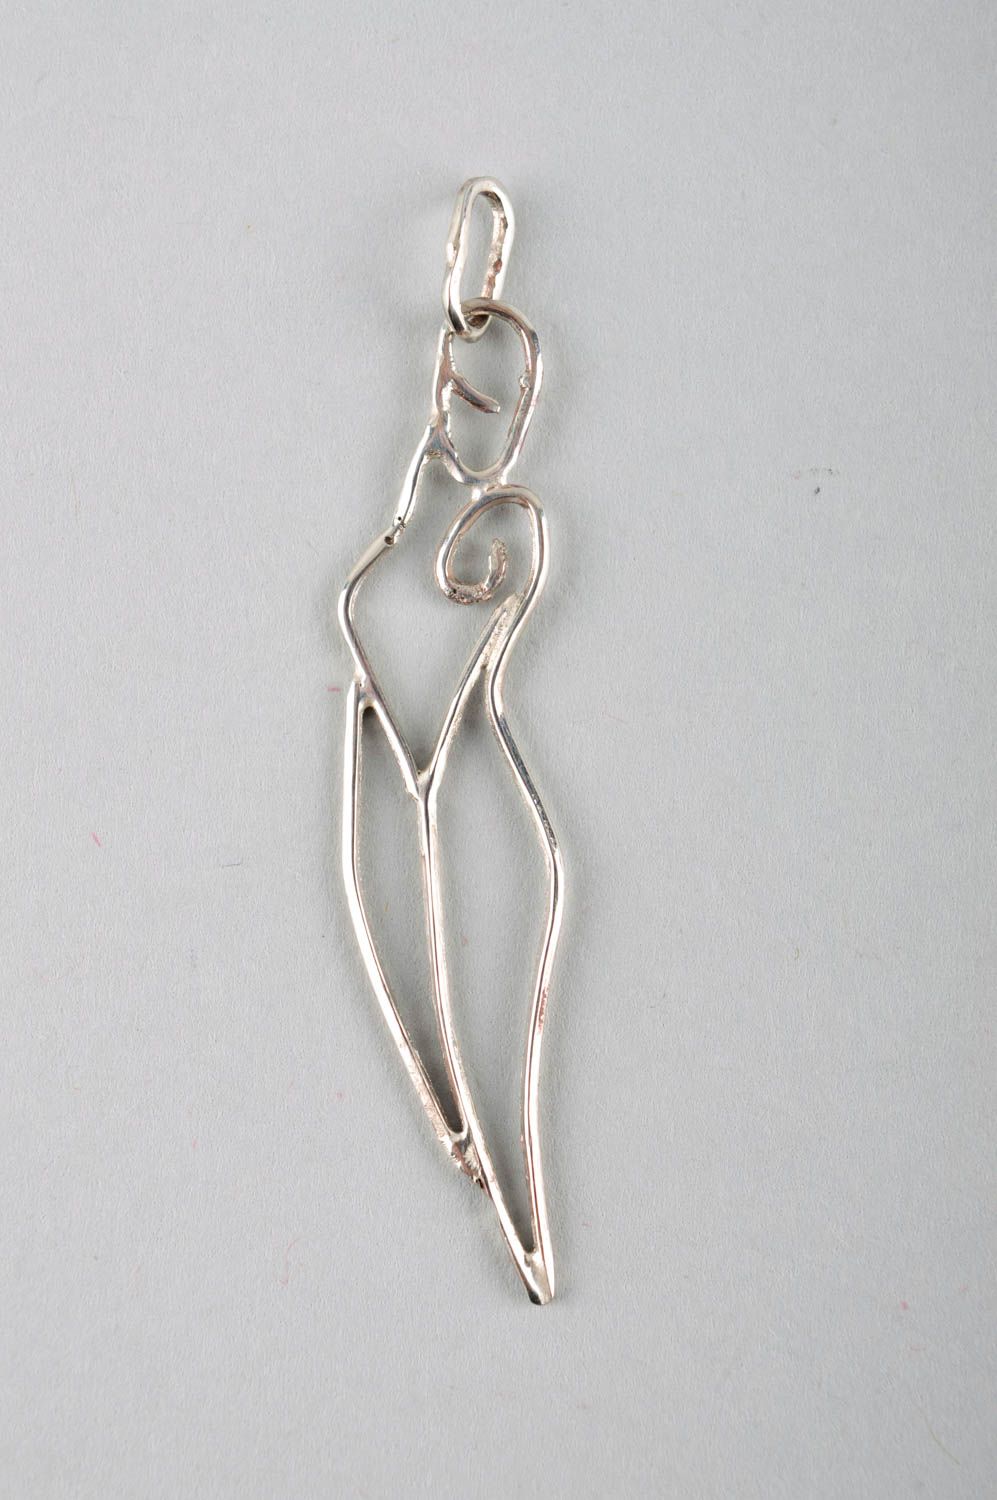 Handmade pendant metal pendant designer accessory unusual gift beautiful jewelry photo 2